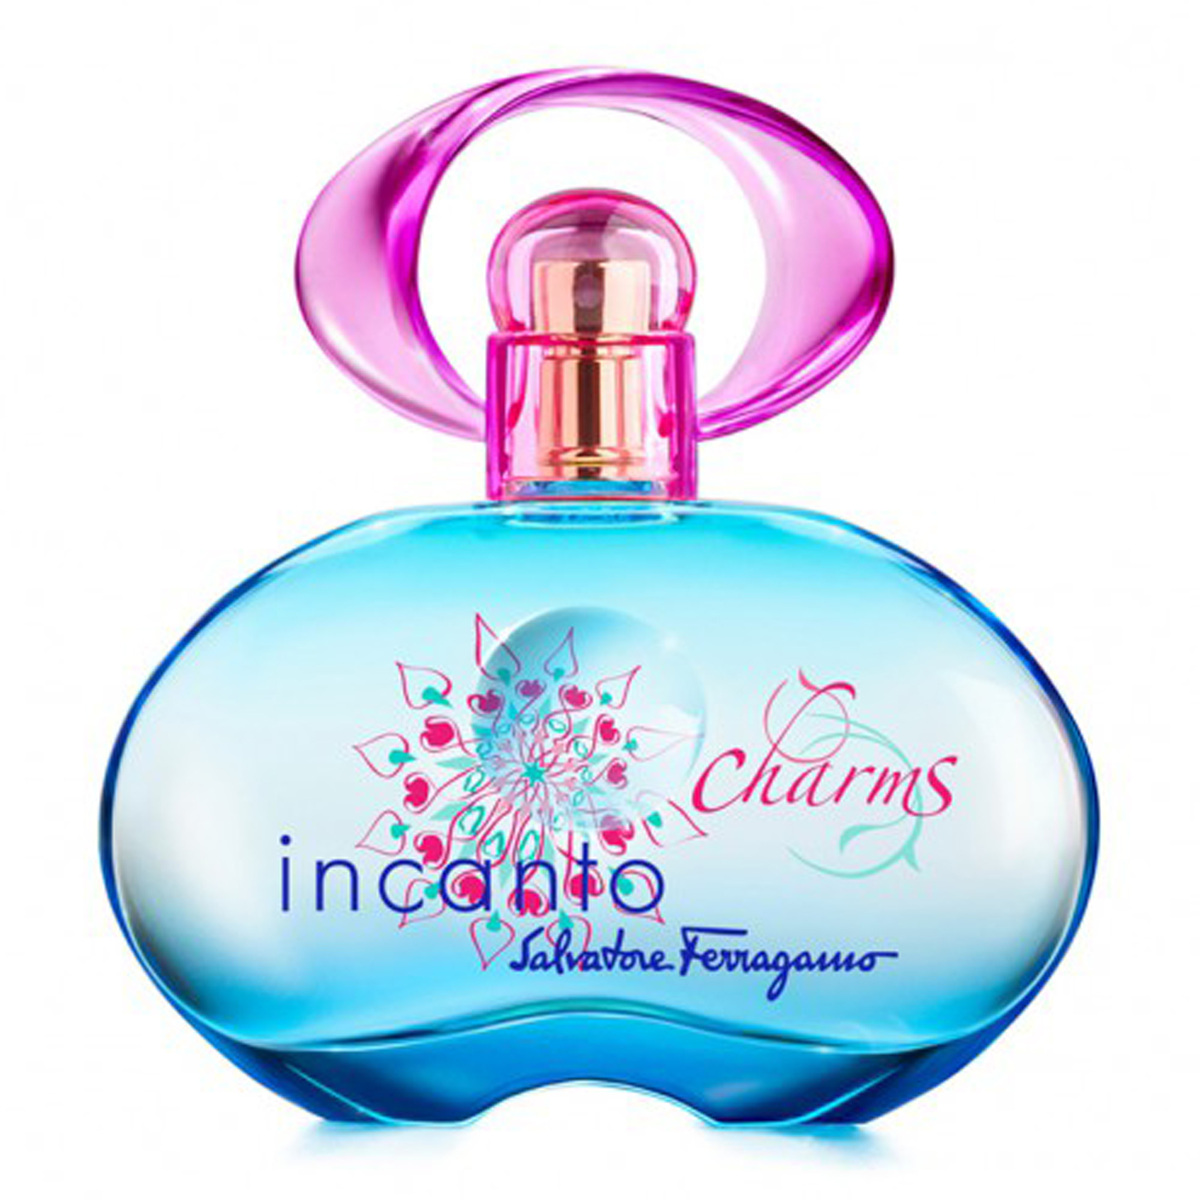 Salvatore Ferragamo Incanto Charms Eau de Toilette Perfume For Women, 100 ml